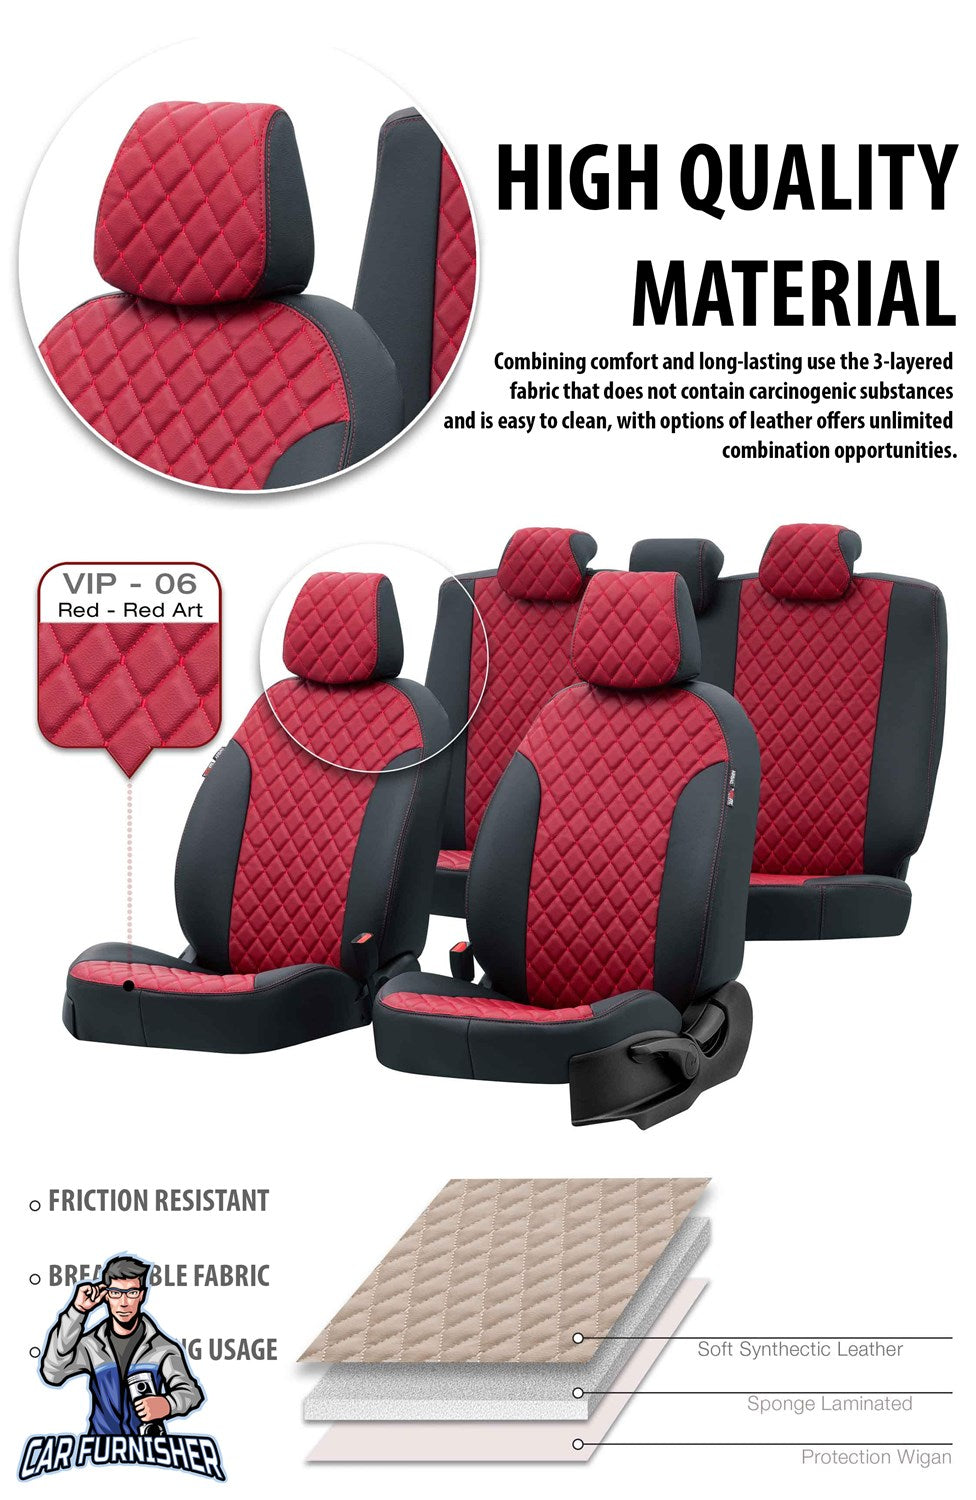 Citroen C1 Seat Covers Madrid Leather Design Dark Gray Leather